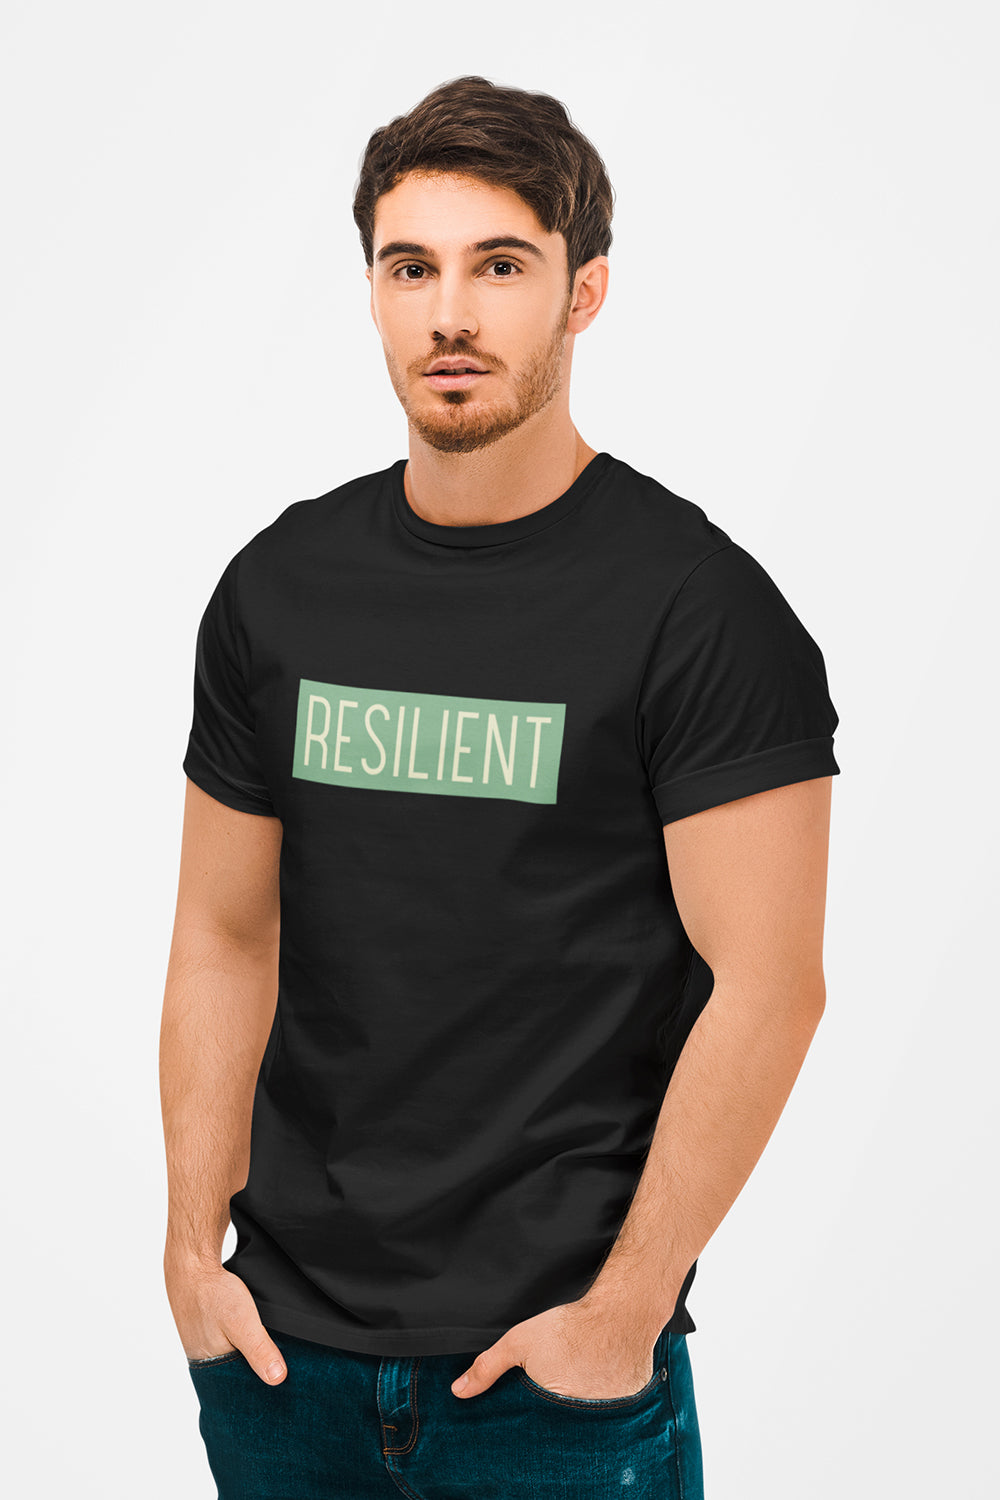 Resilient Graphic Printed Black Tshirt